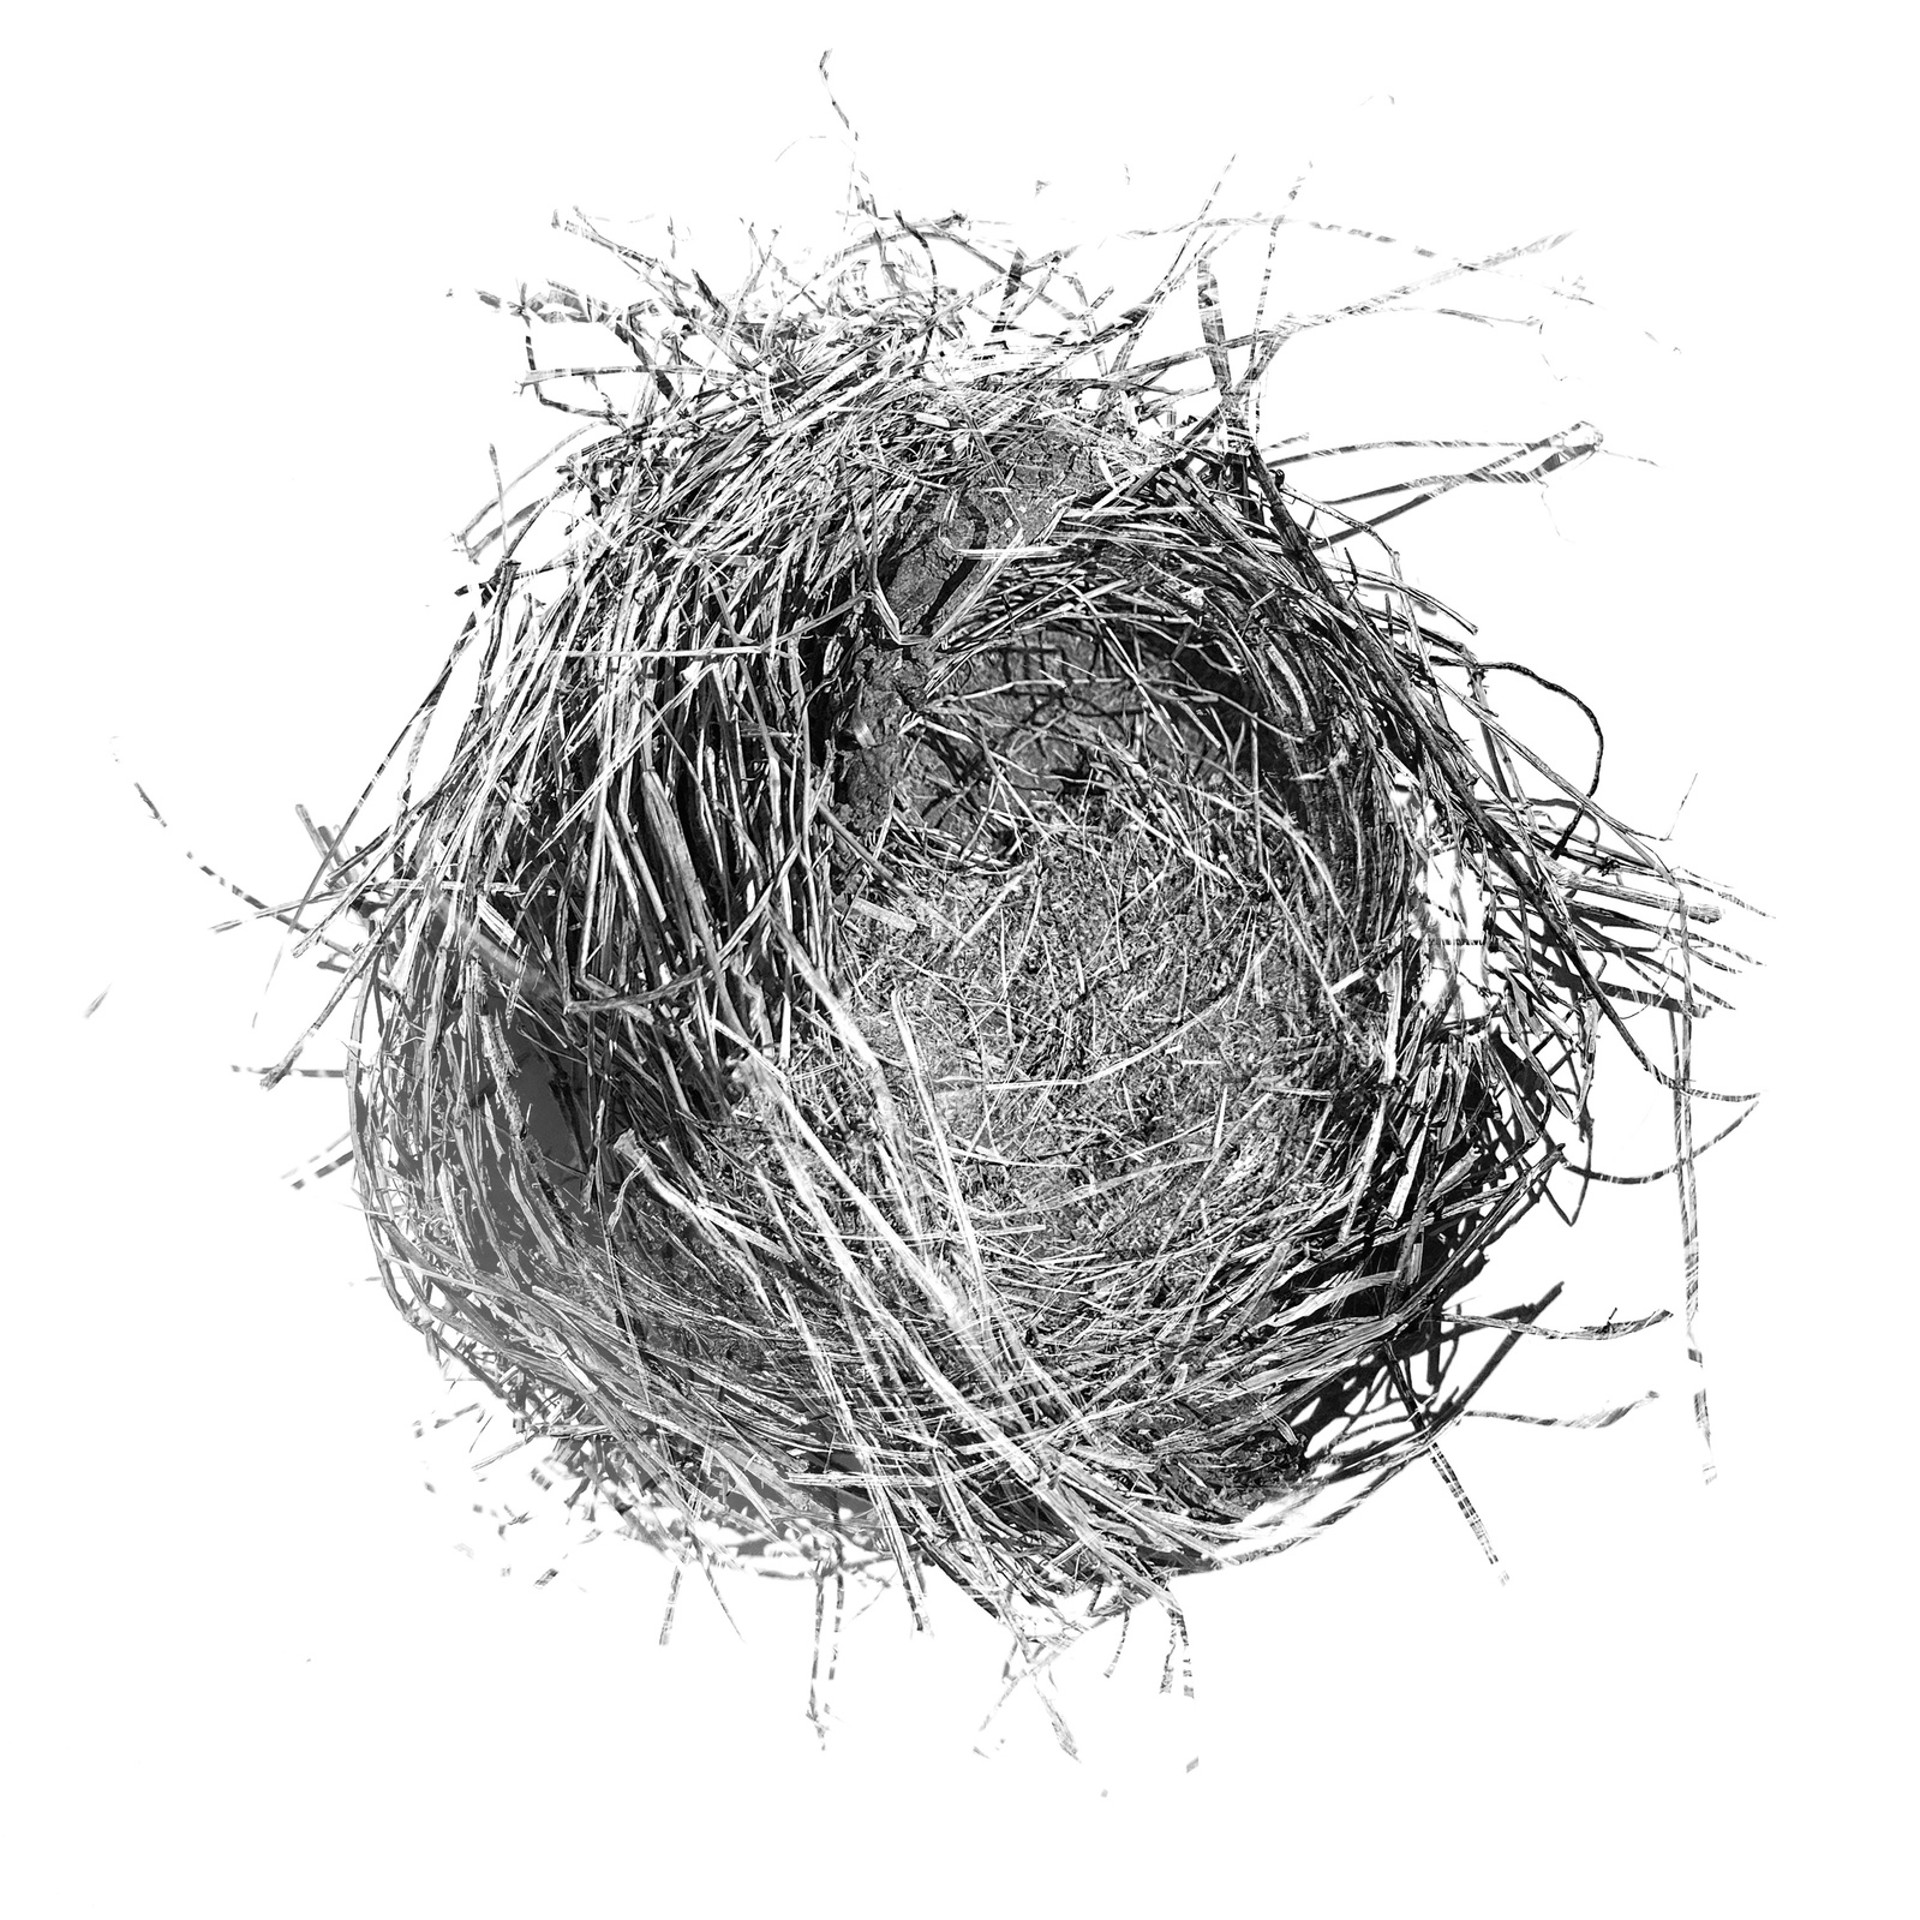 Holding: nest found in Dubuque, IA by Rachel Deutmeyer